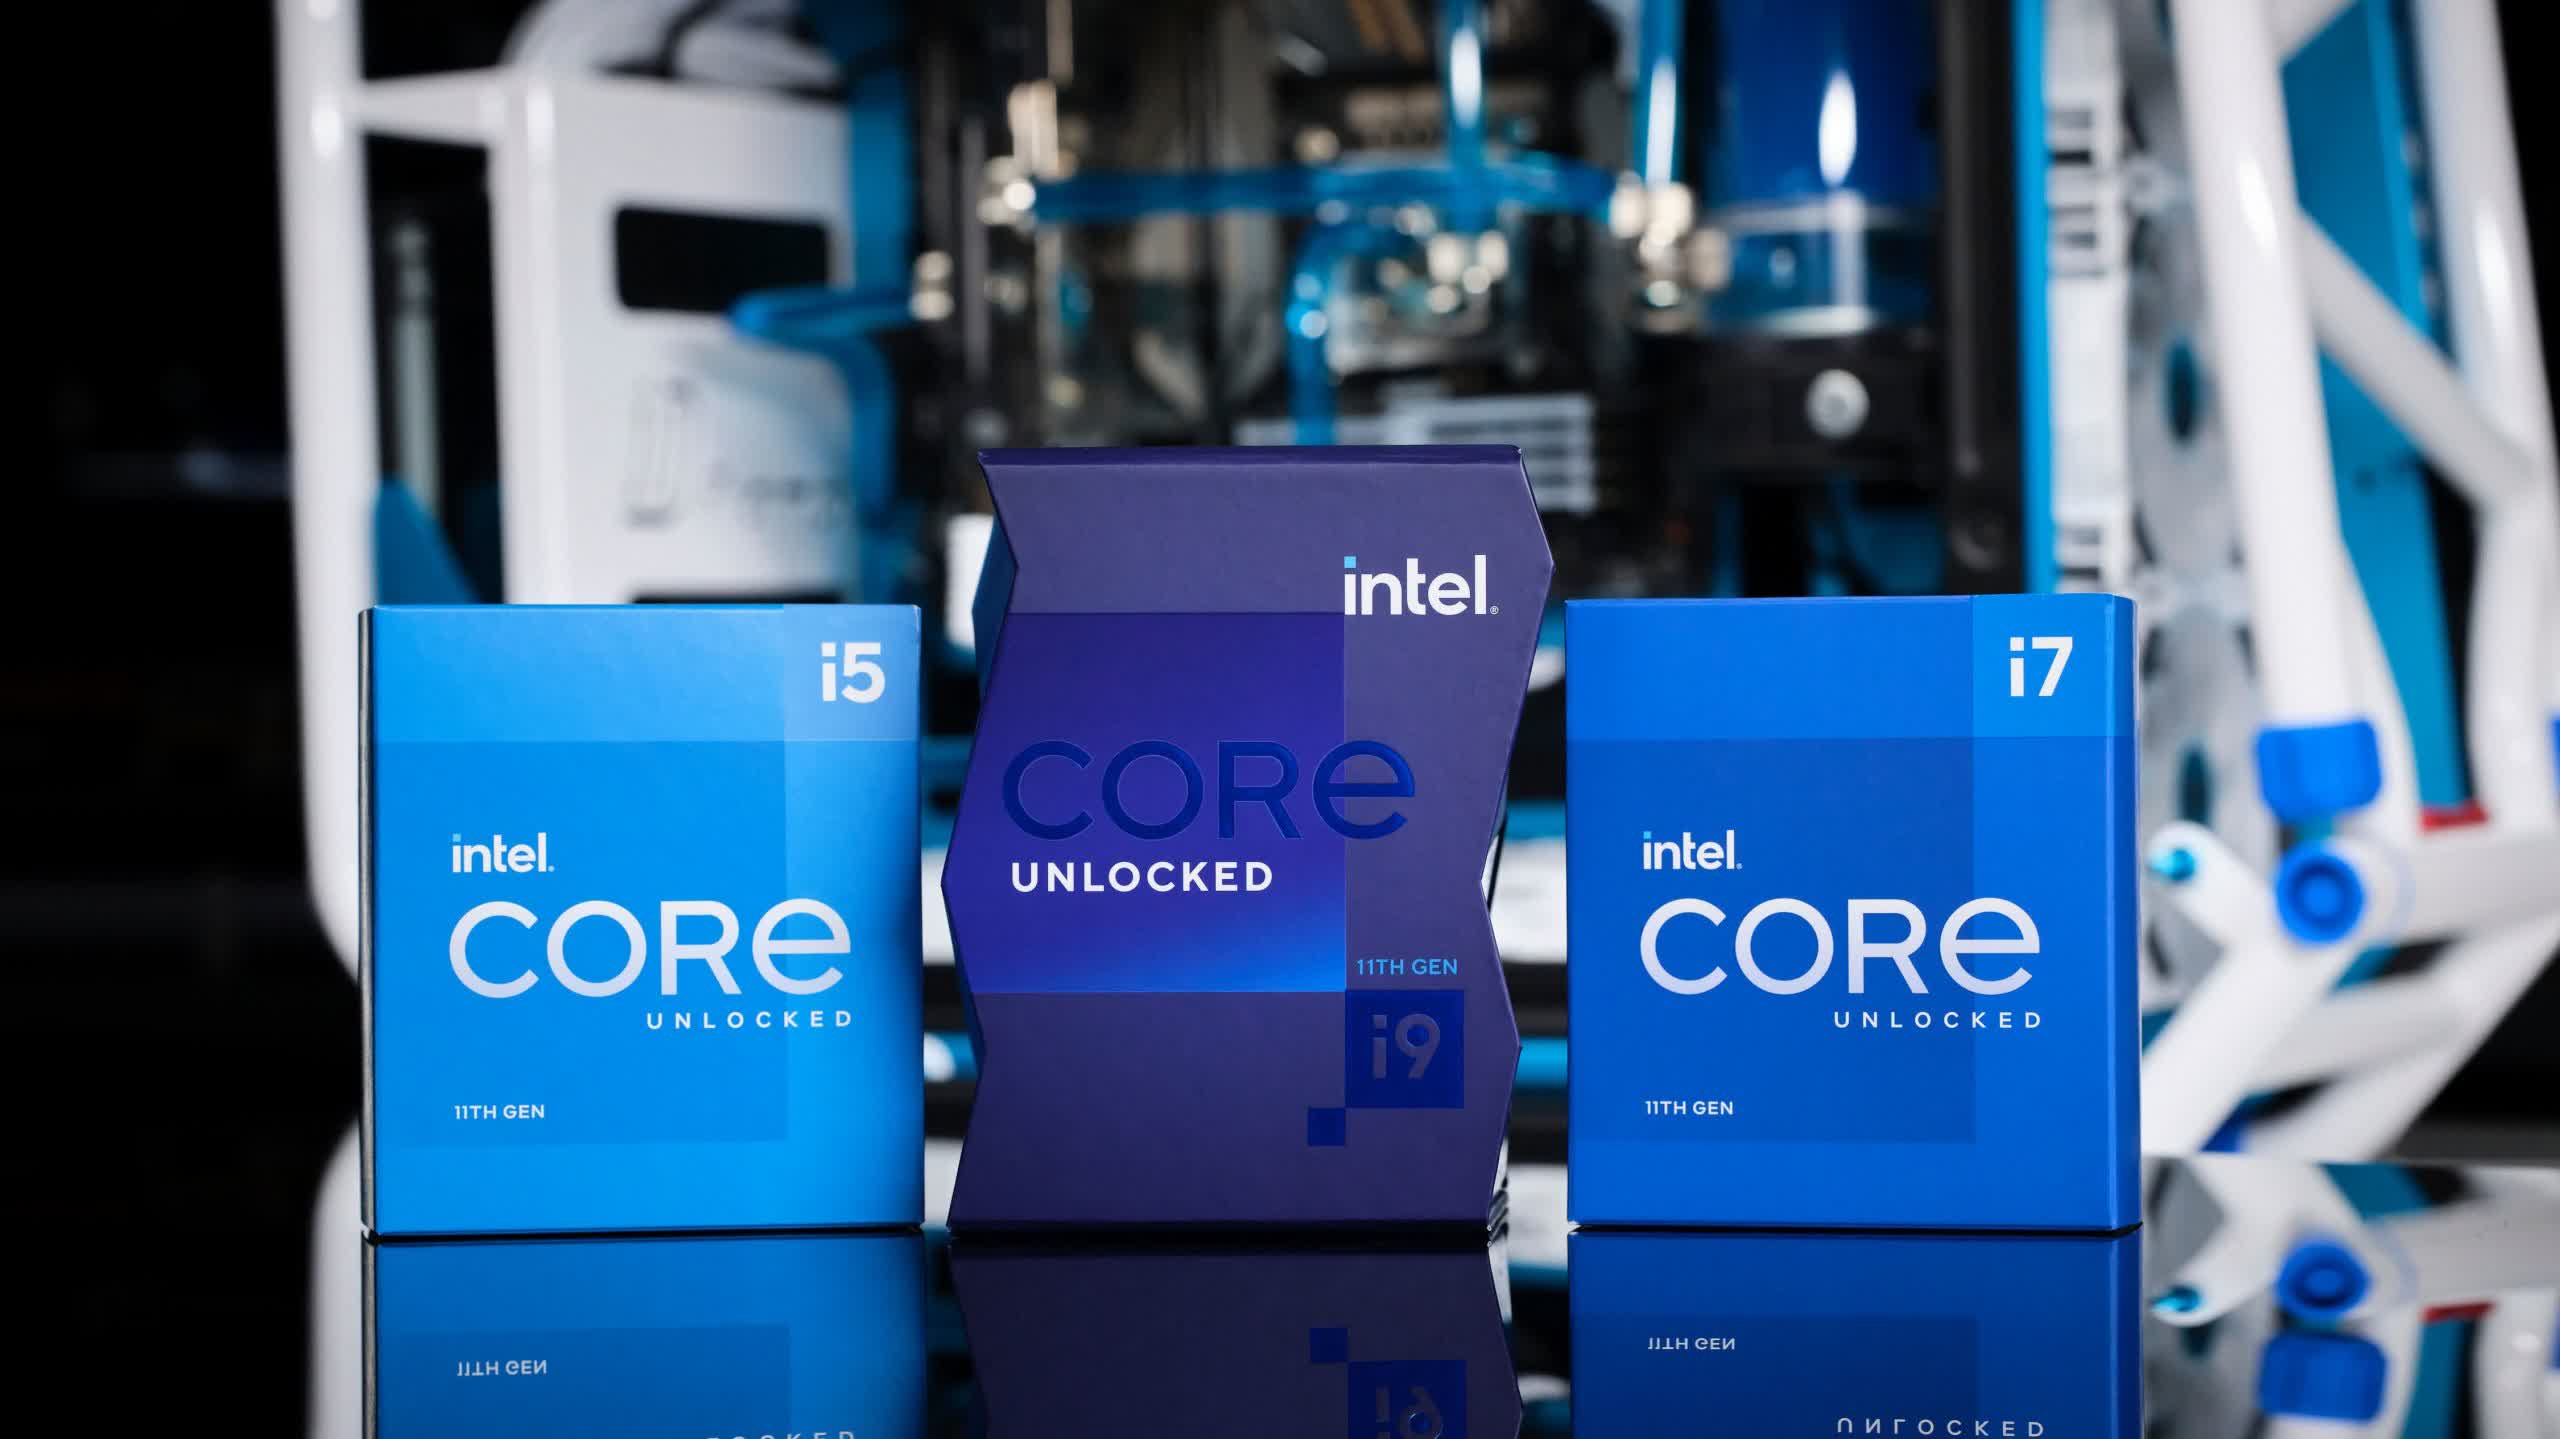 Overclocker pushes Intel's Core i9-11900K Rocket Lake-S chip to 7 GHz using LN2